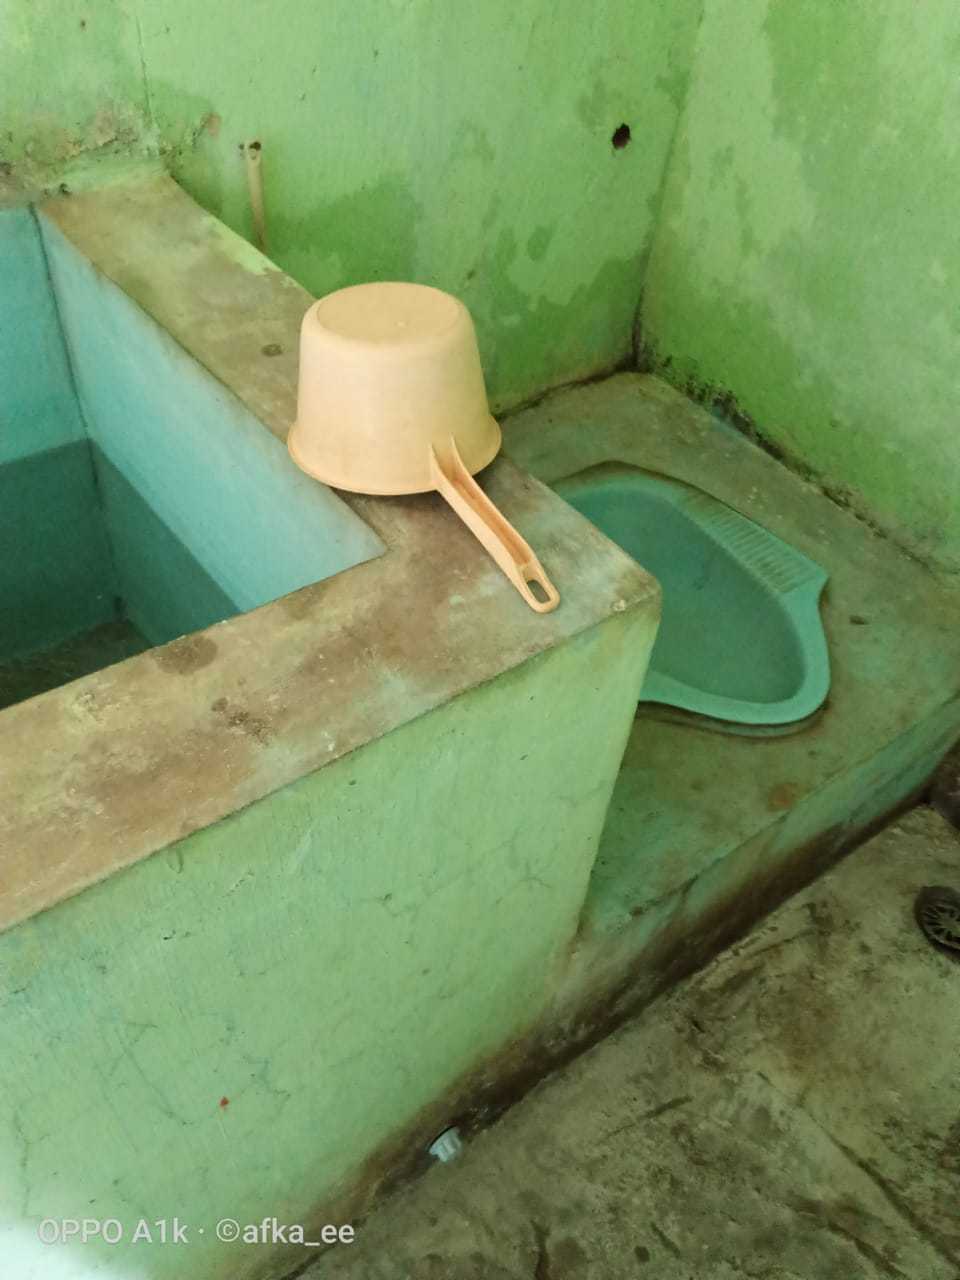 Kamar Mandi / WC